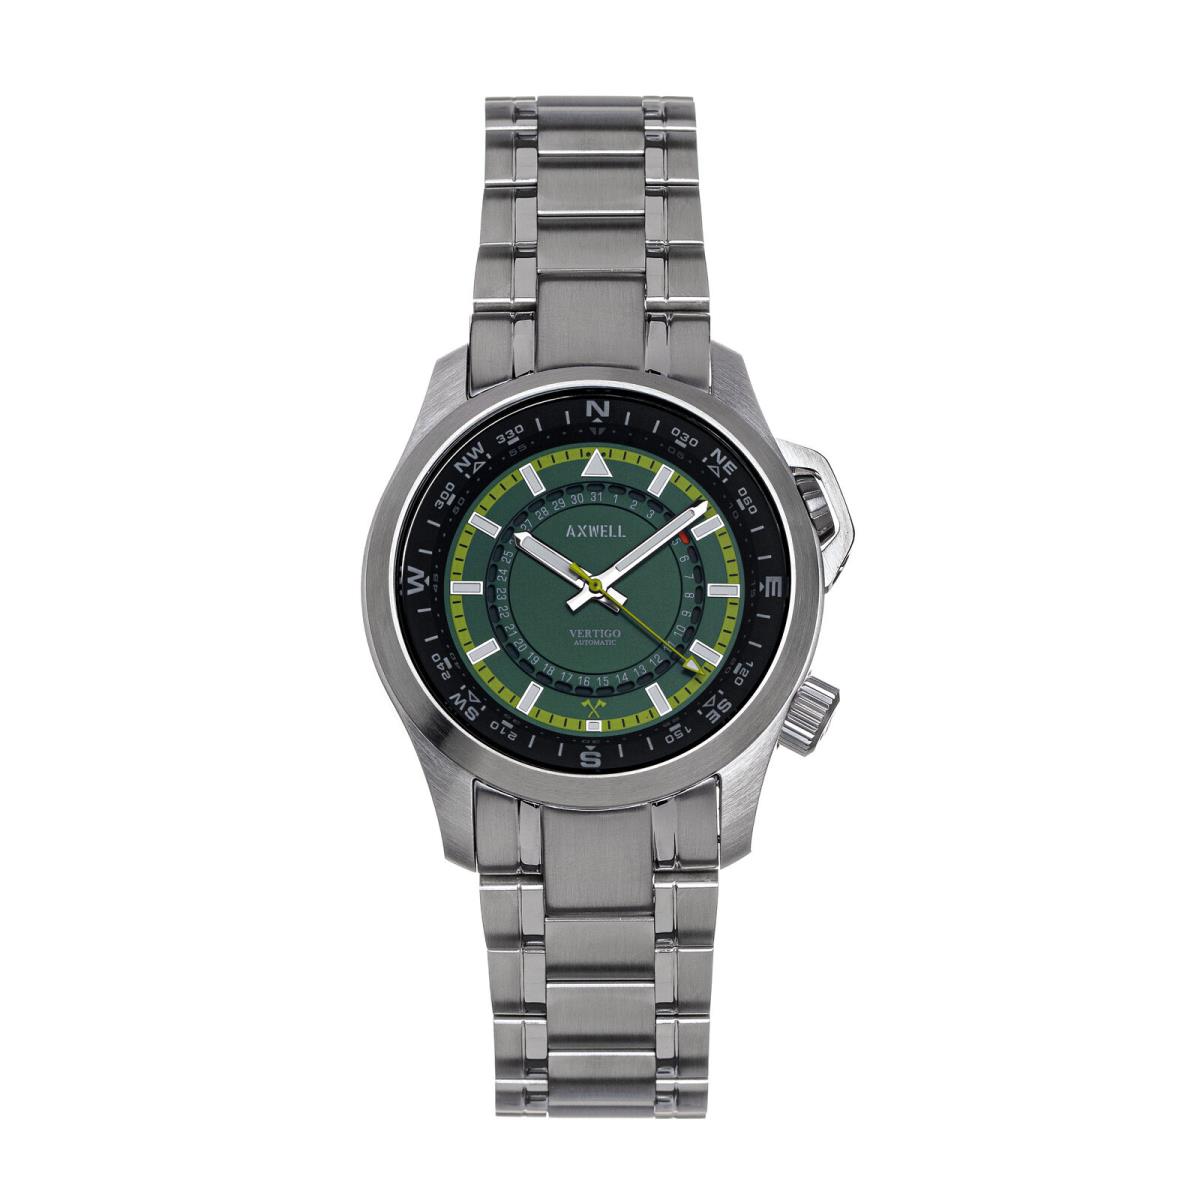 Axwell Vertigo Bracelet Watch W/date - Green